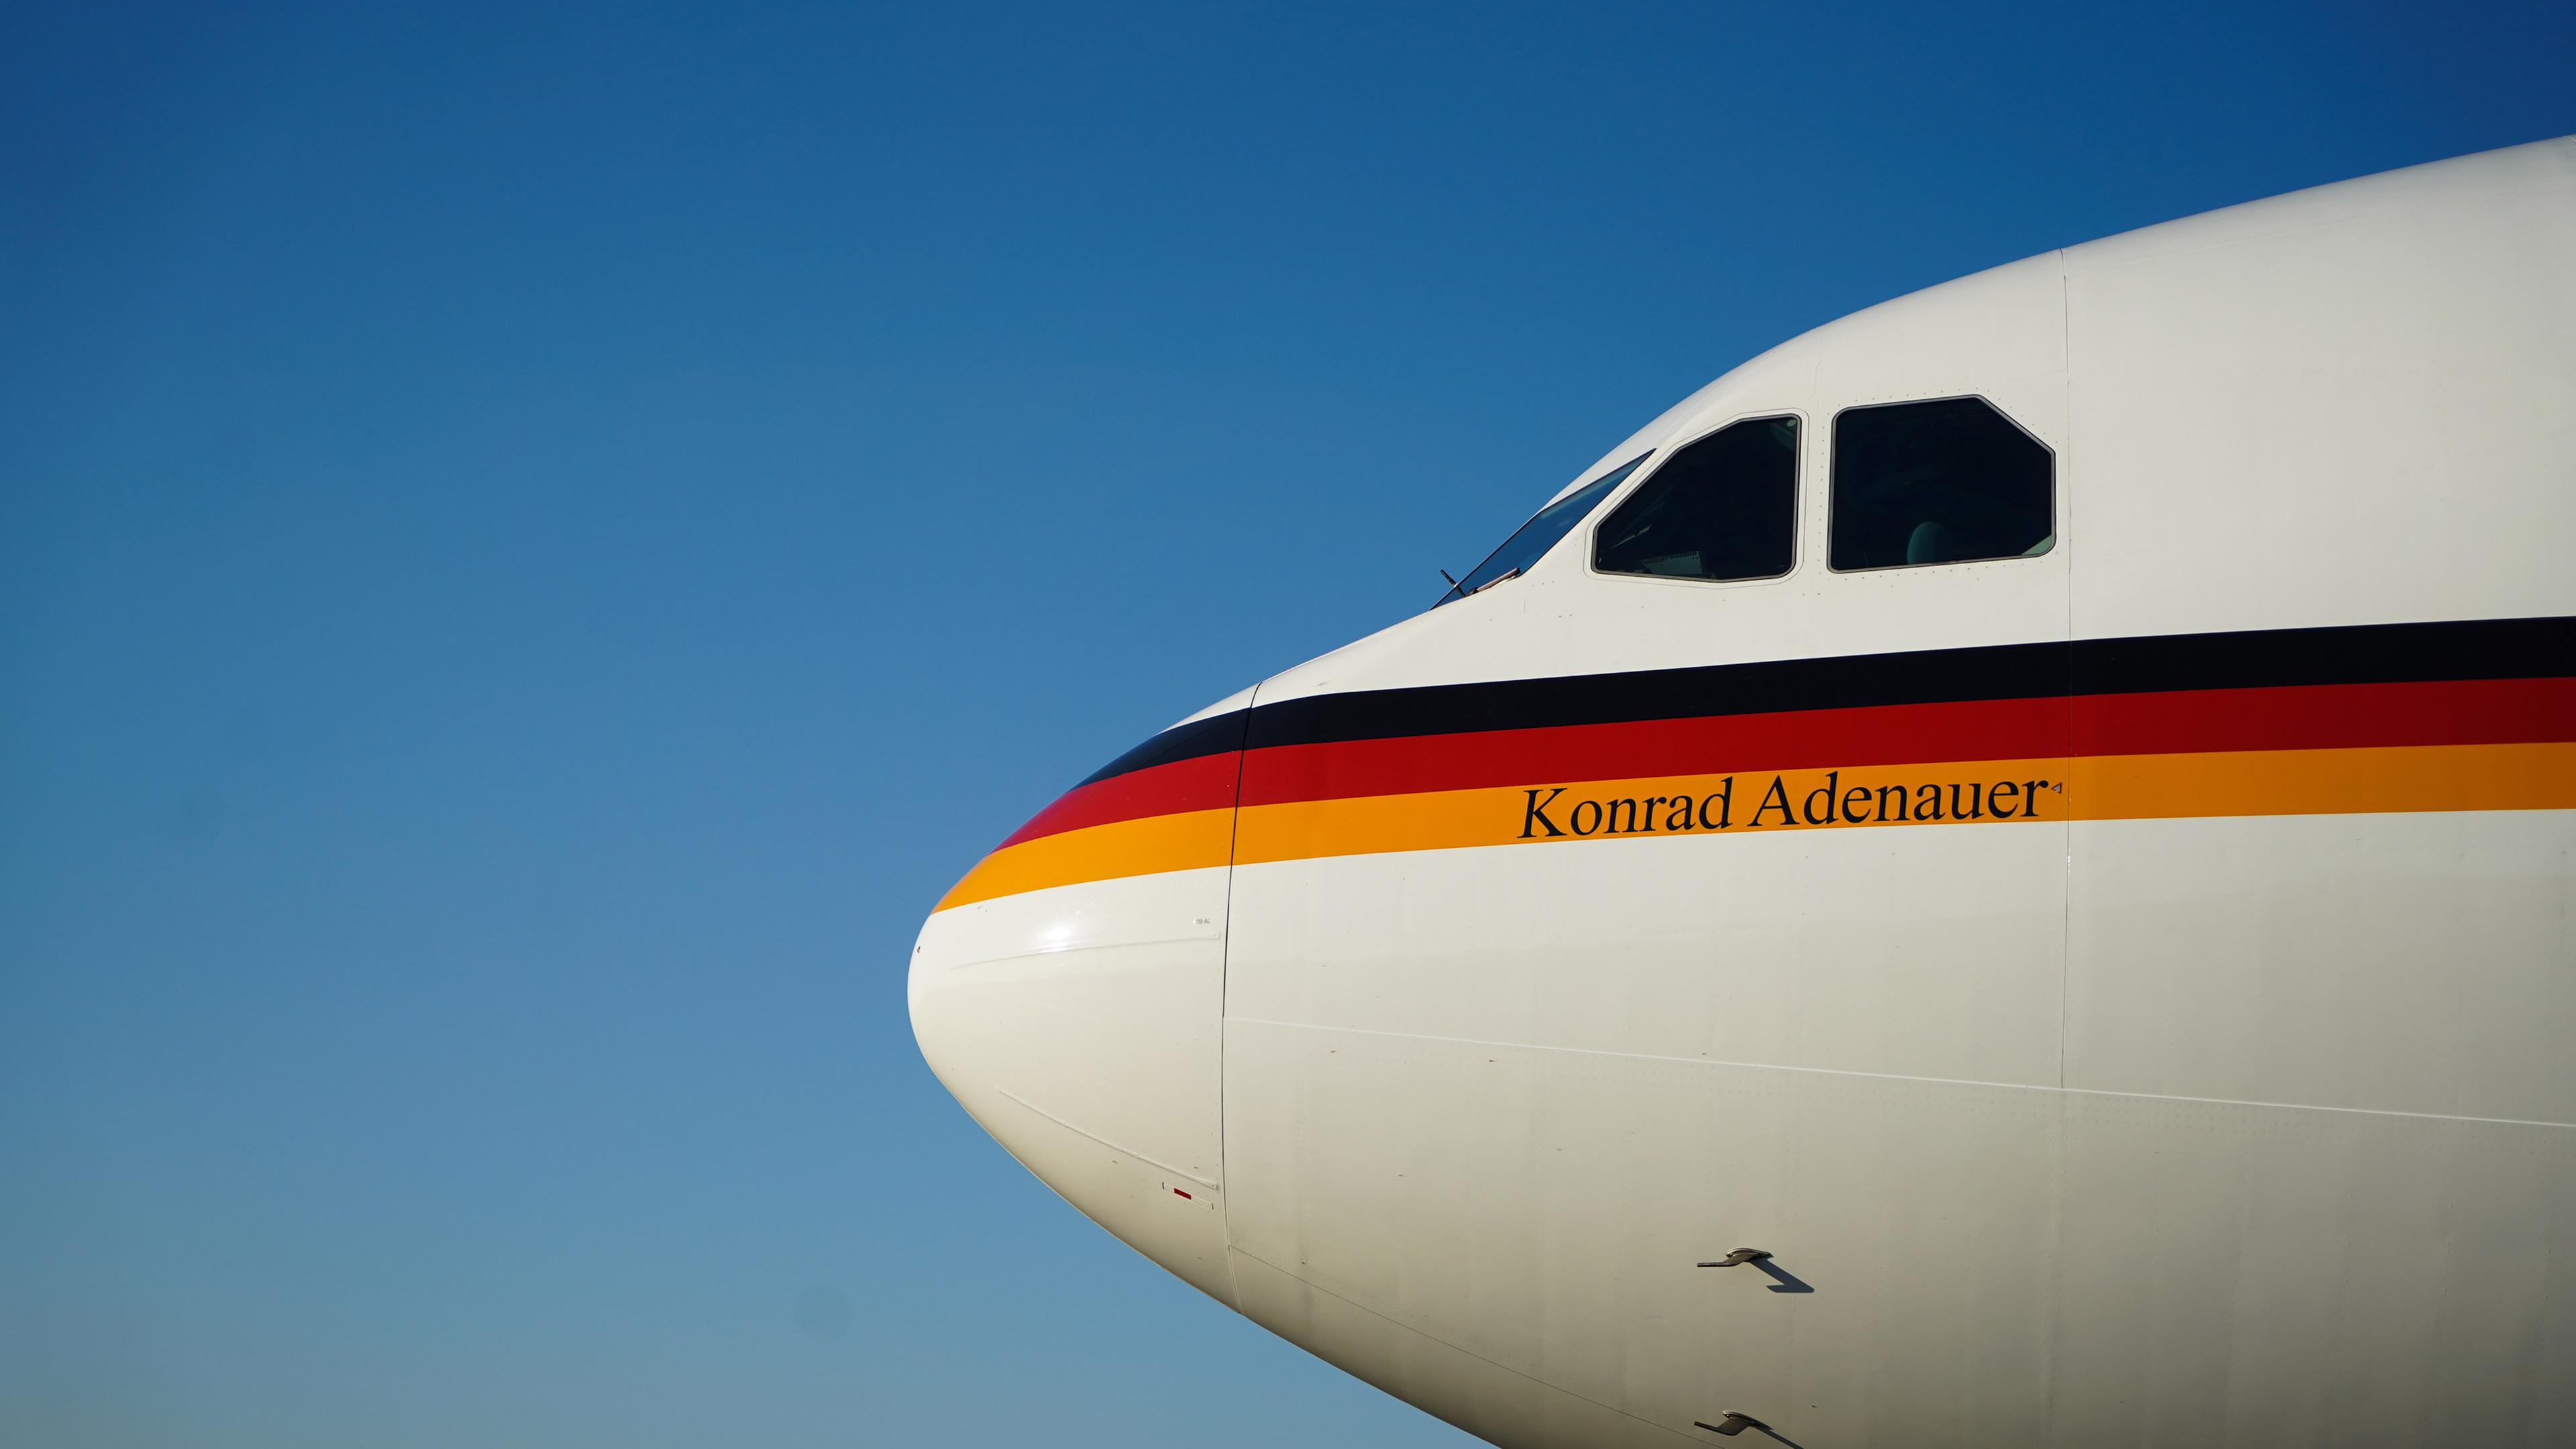 Archiv: Der Regierungs-Airbus A340 "Konrad Adenauer".